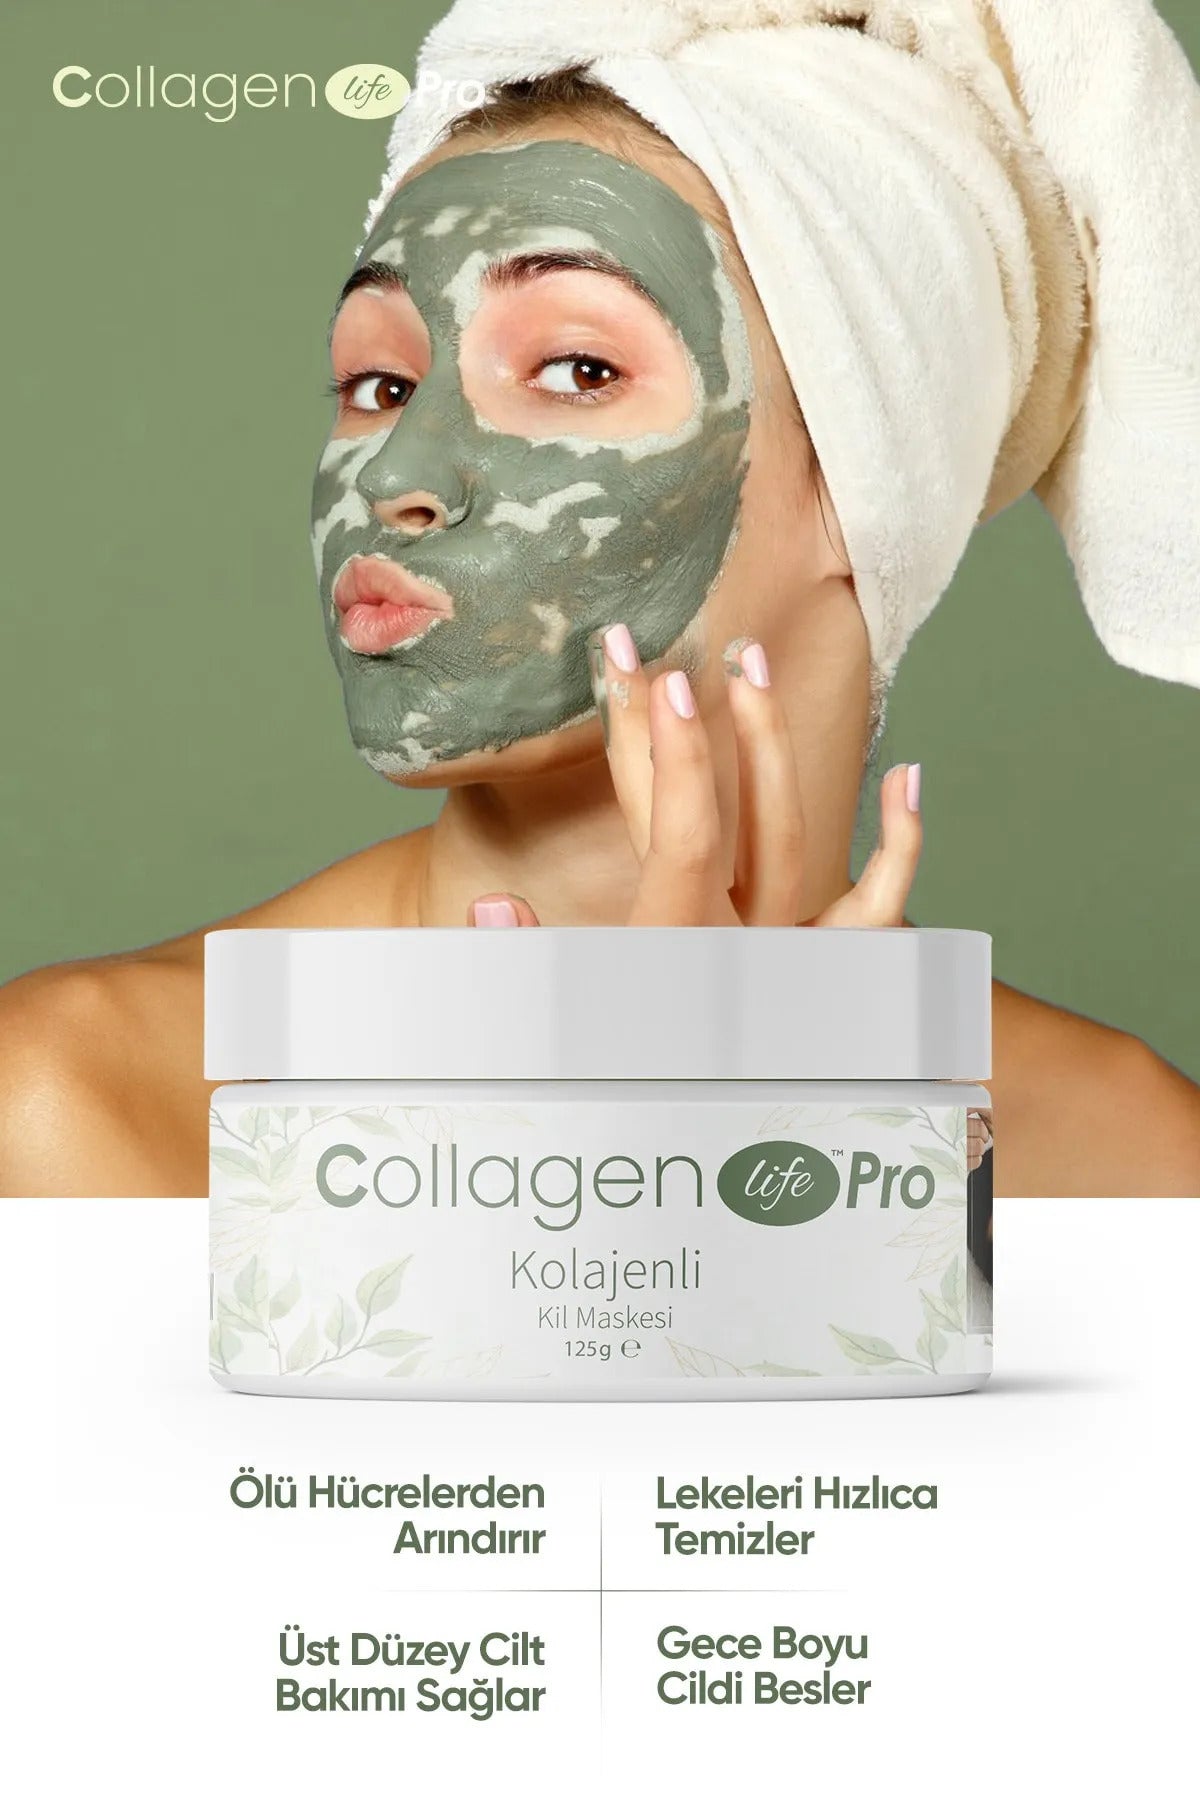 Collagen Life Pro Kolajen Kil Maskesi 125gr